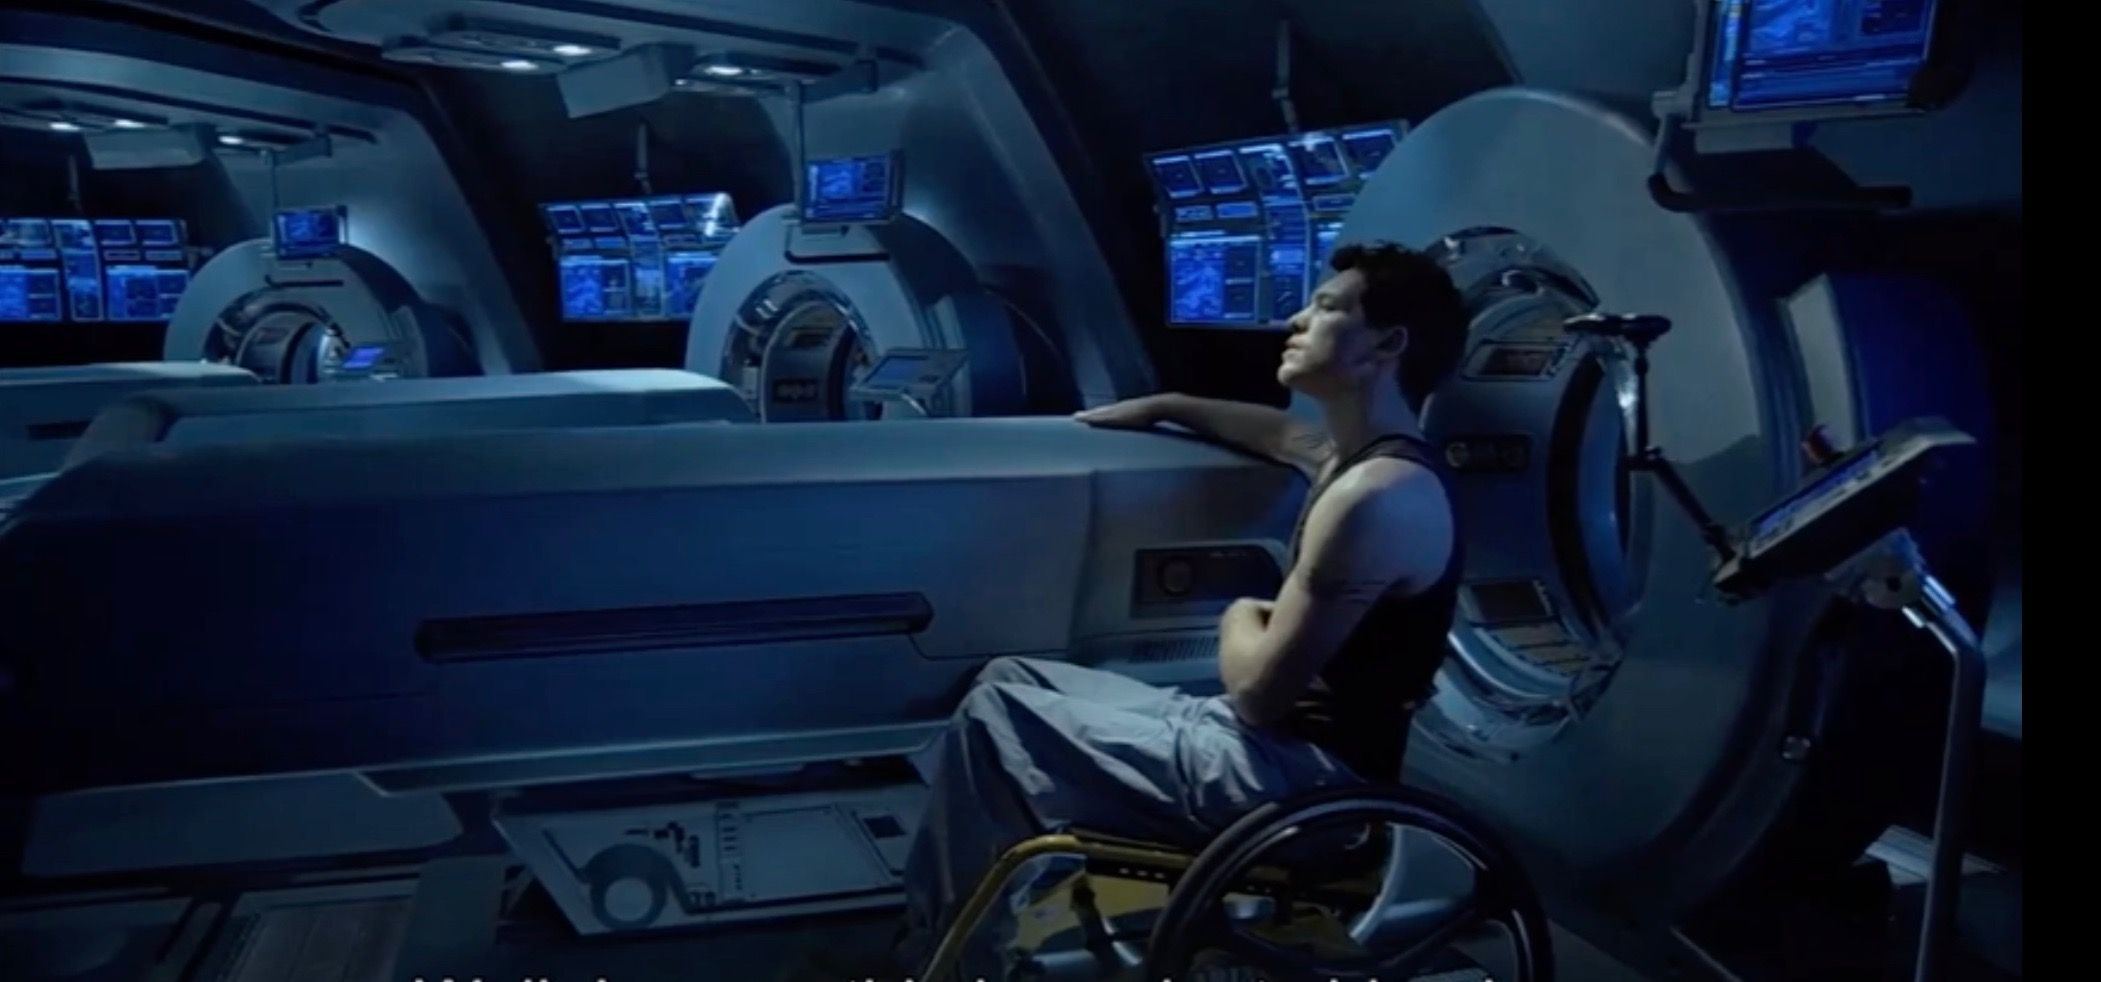 Sam Worthington in a wheelchair in the avatar lab in Avatar.